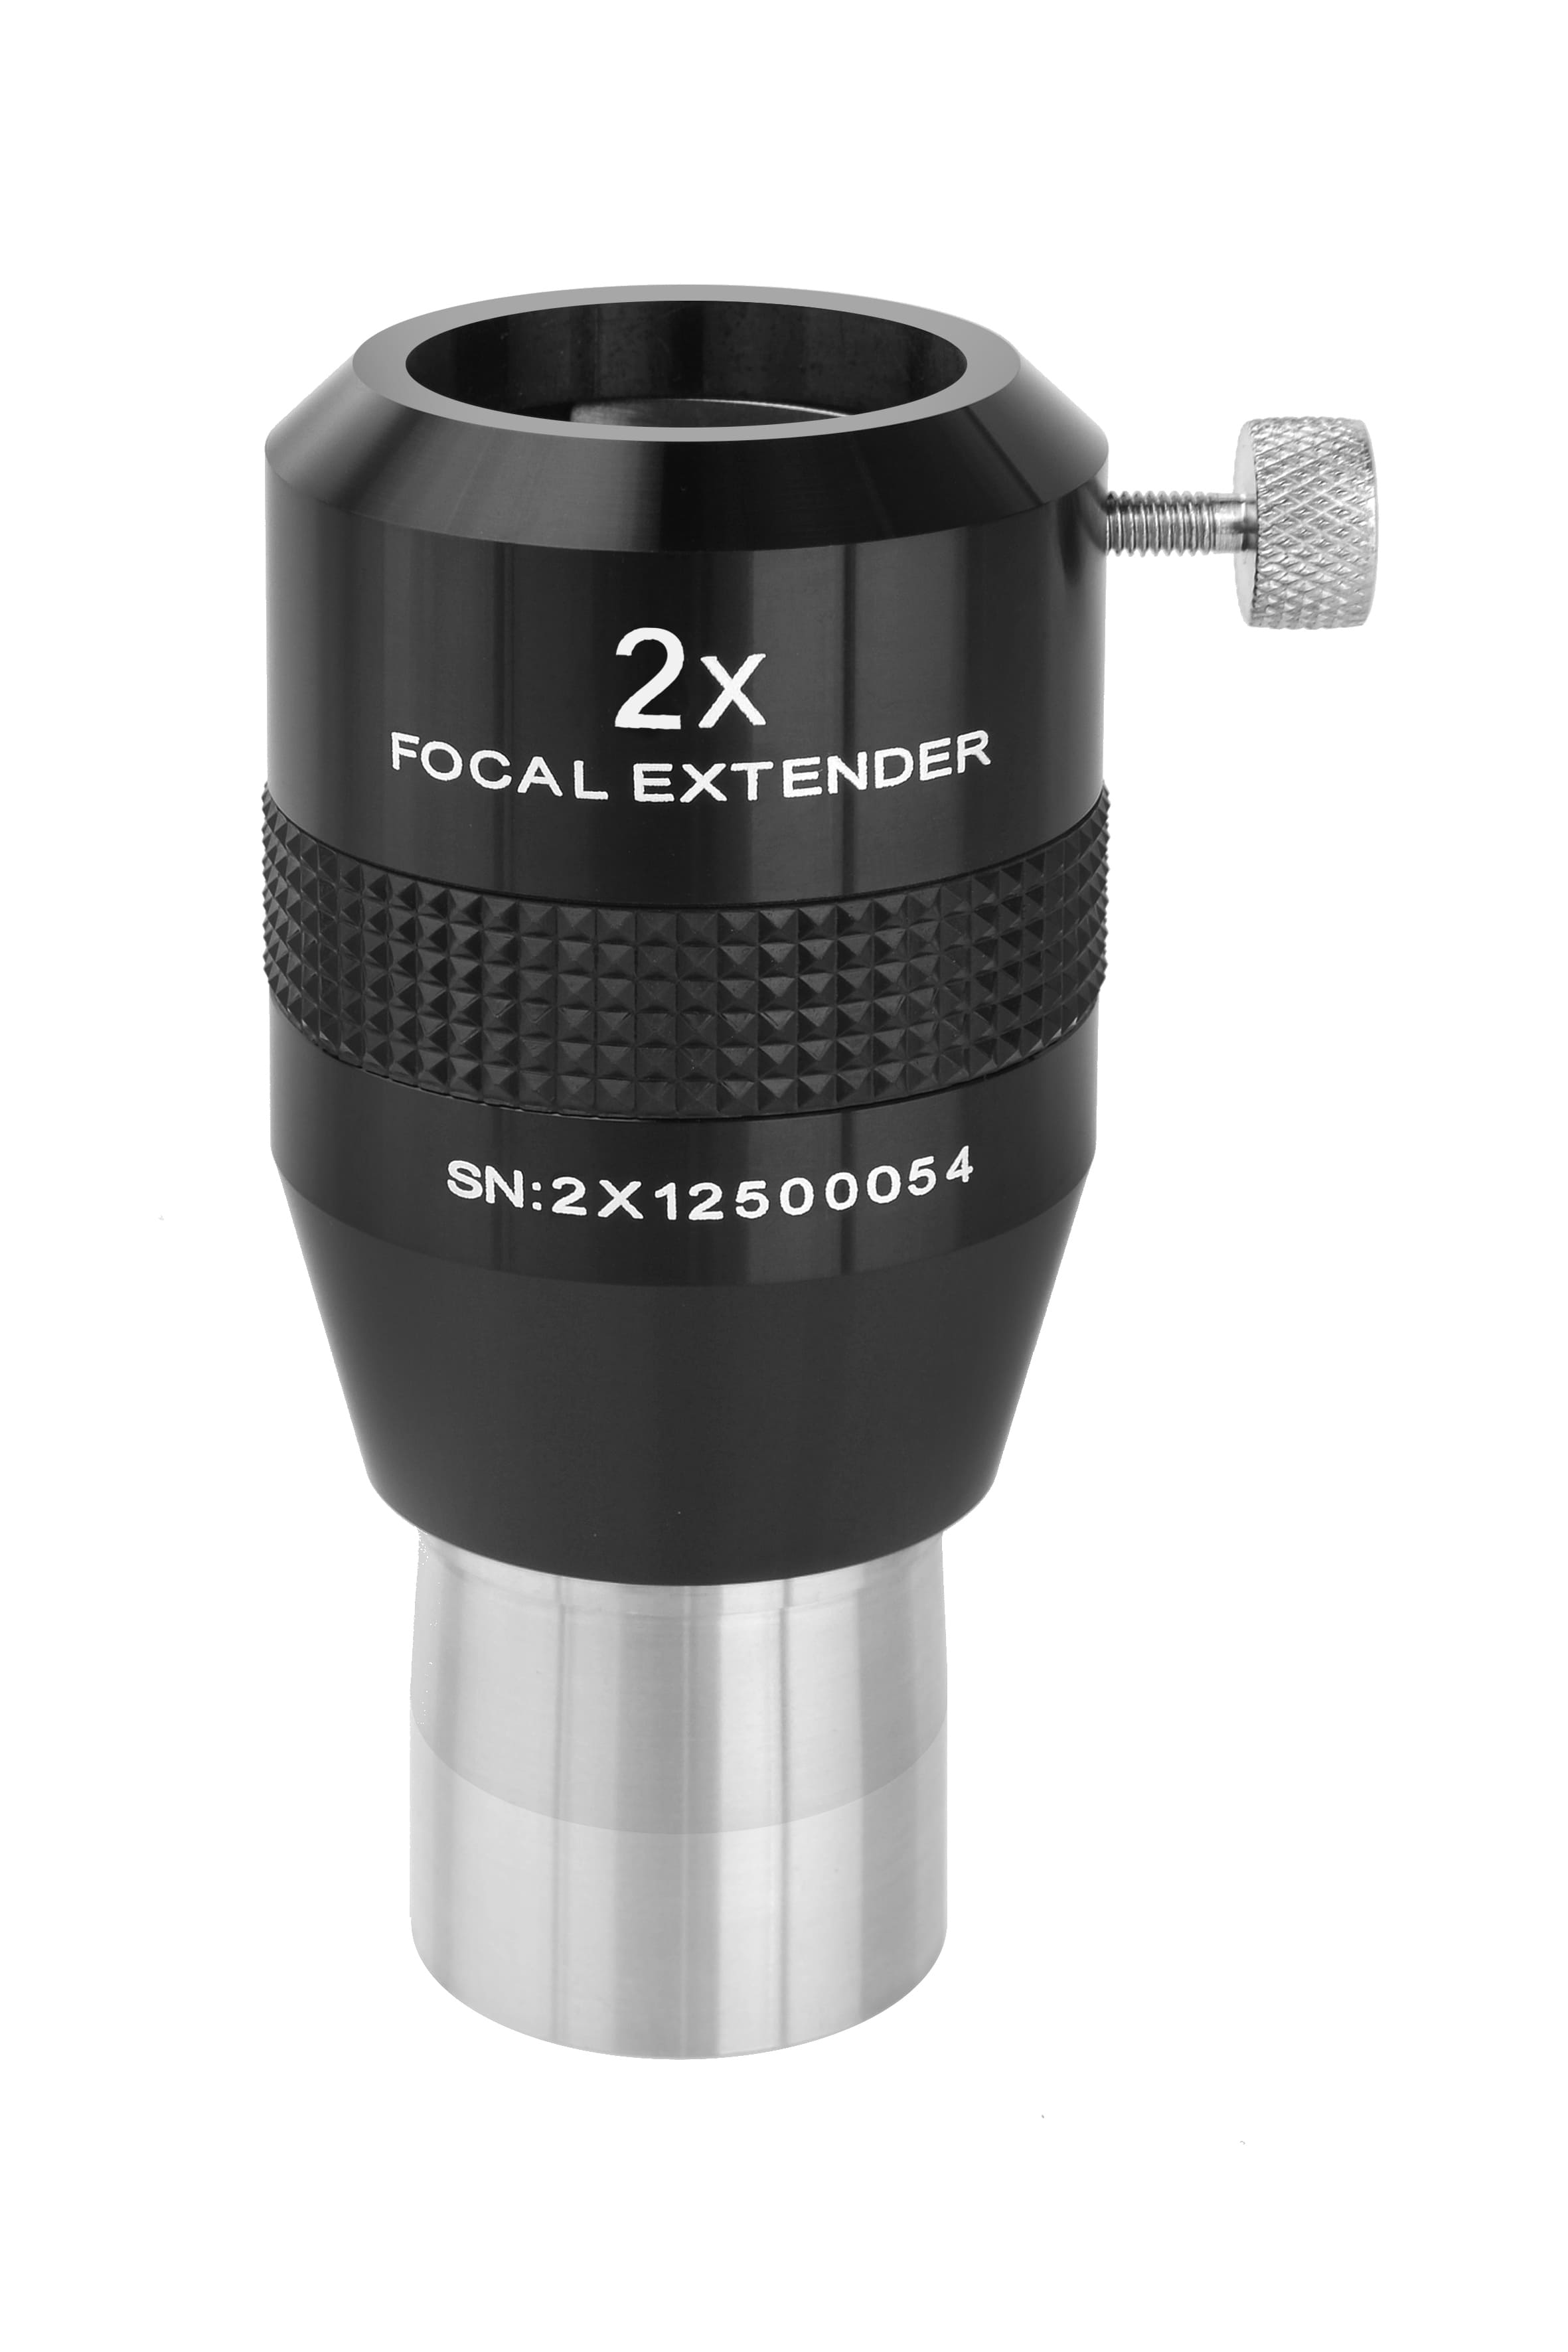   Four-lens Premium-Teleextender with extension factor 2x [EN]  